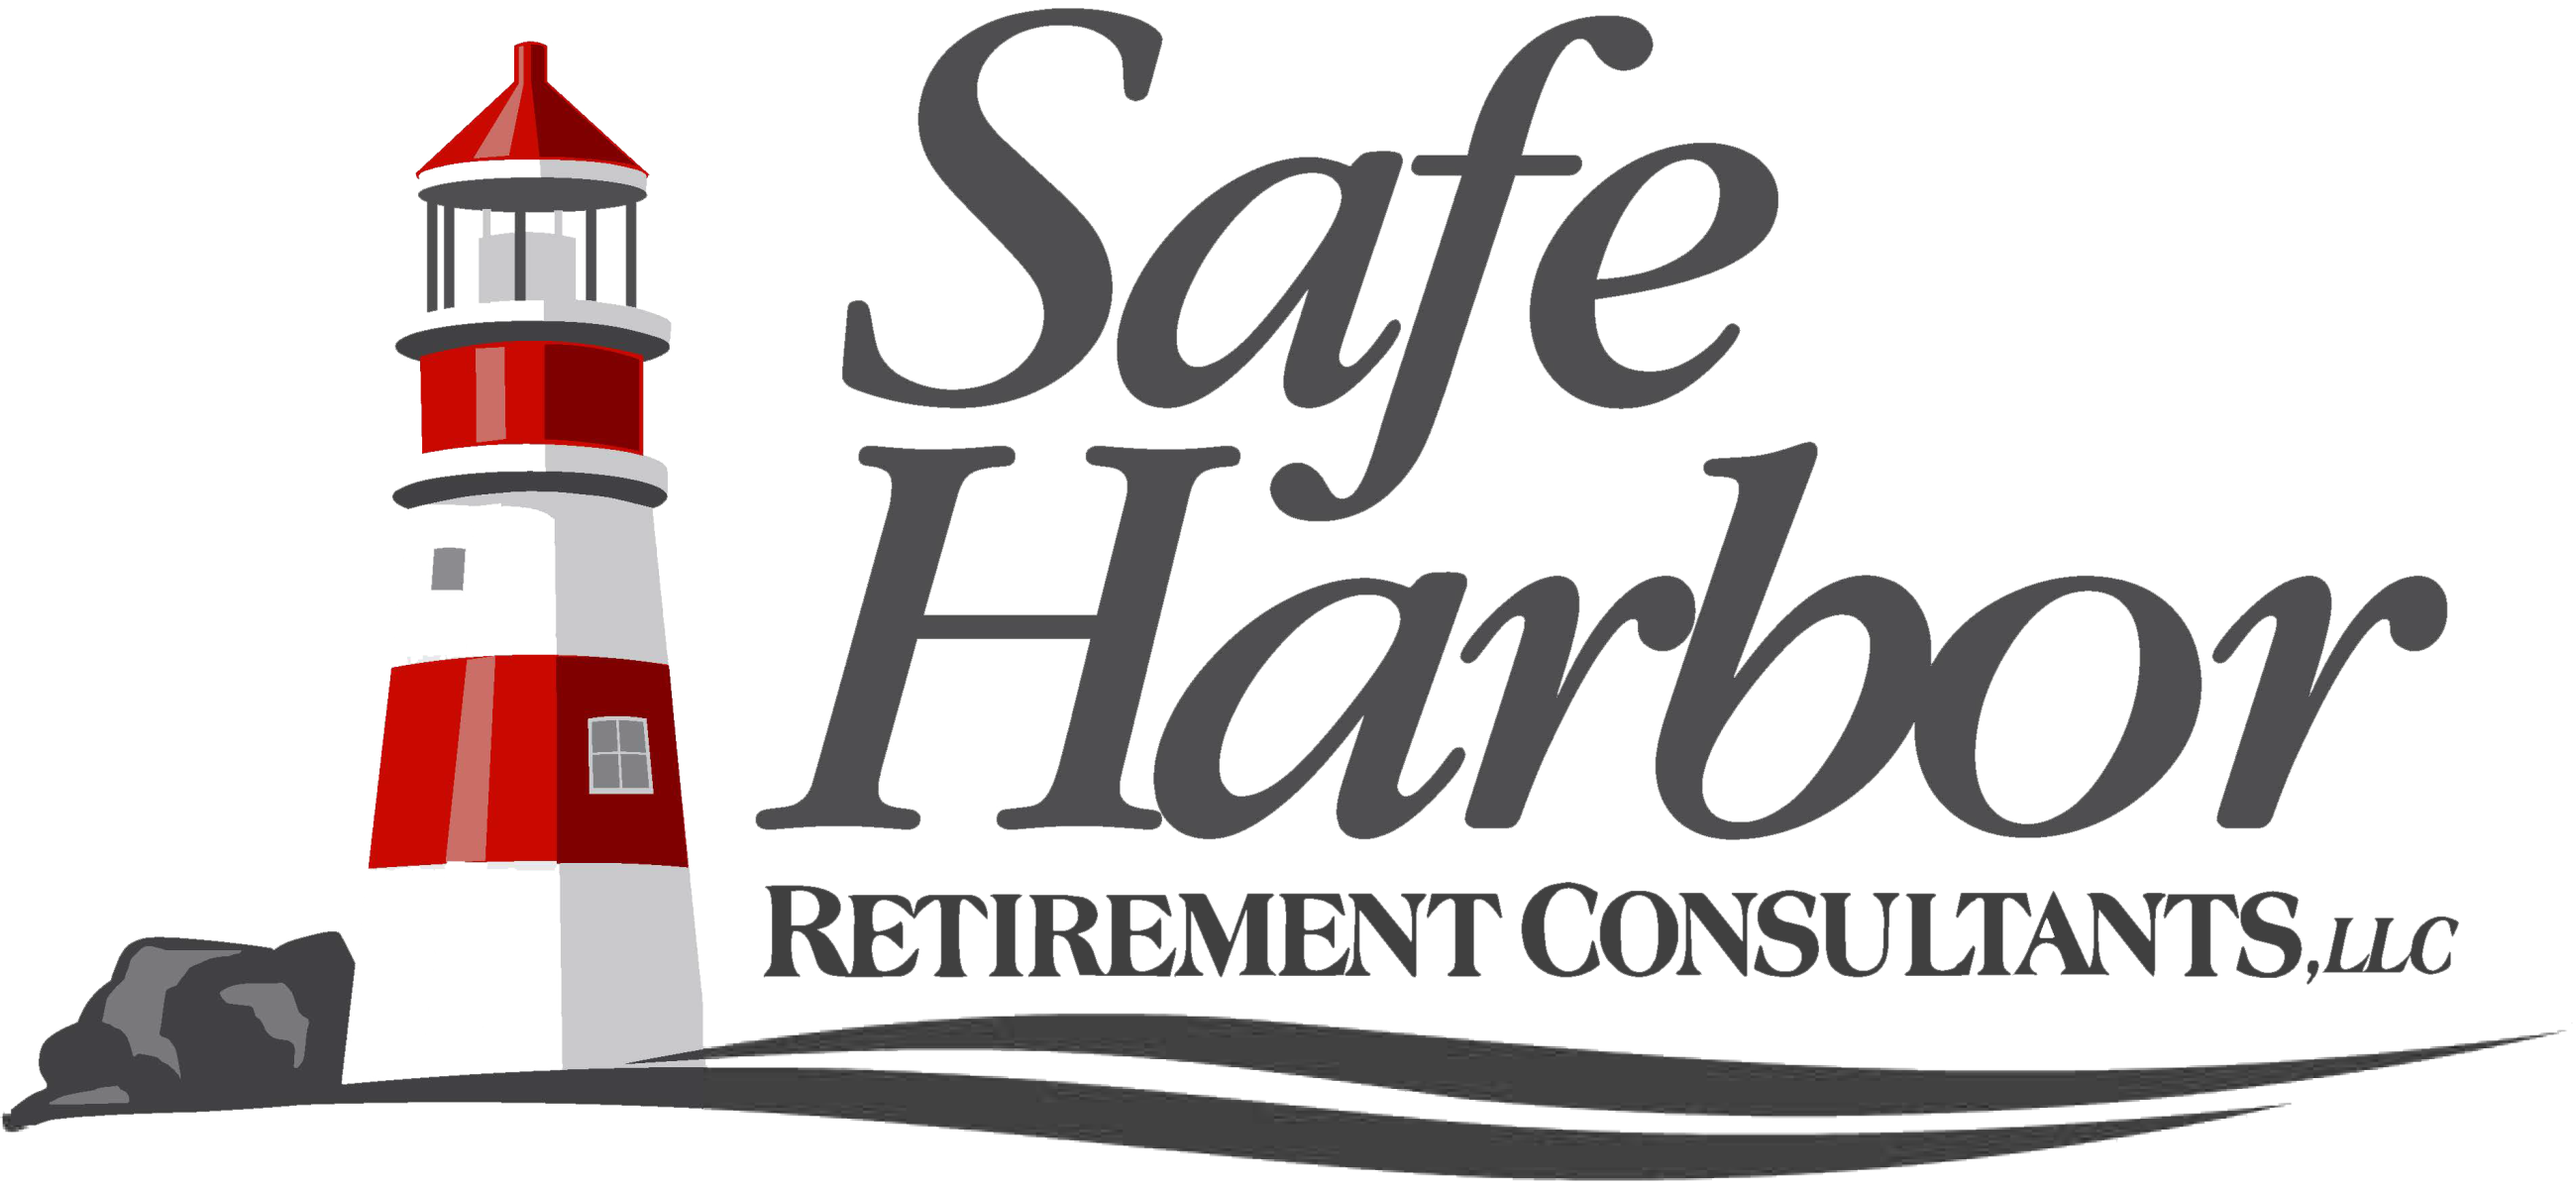 client-login-safe-harbor-retirement-consultants-llc